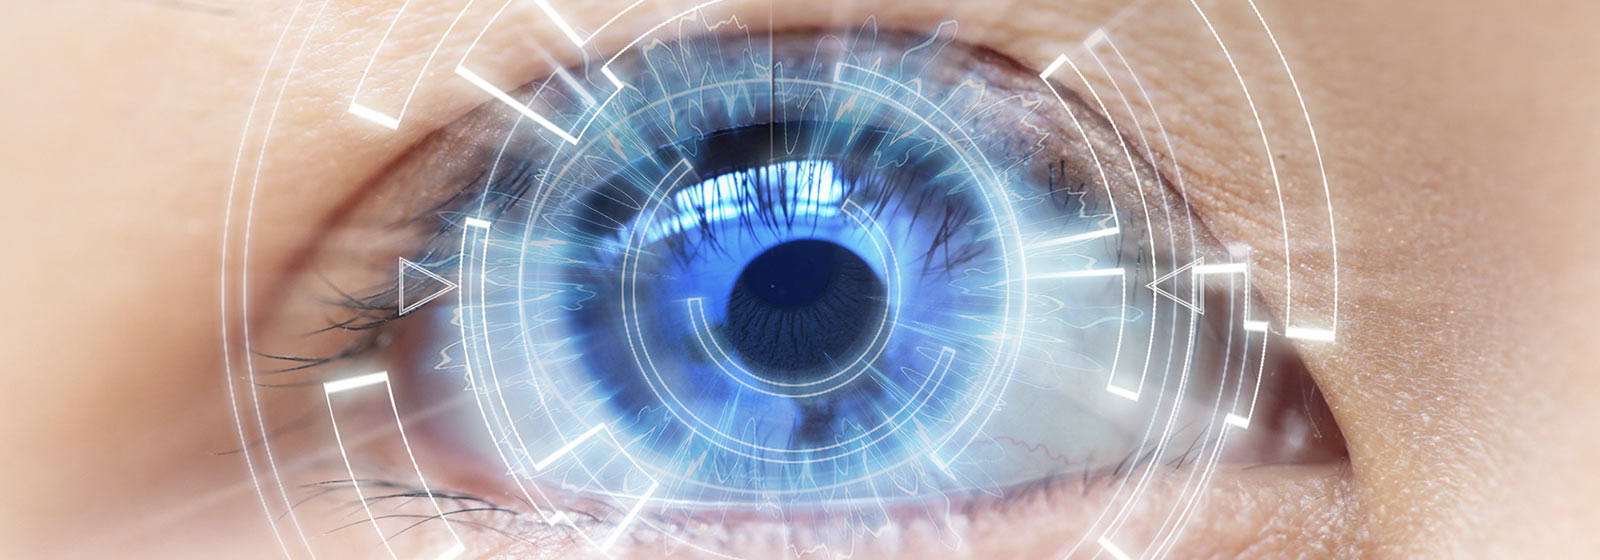 misleading laser eye surgery claims